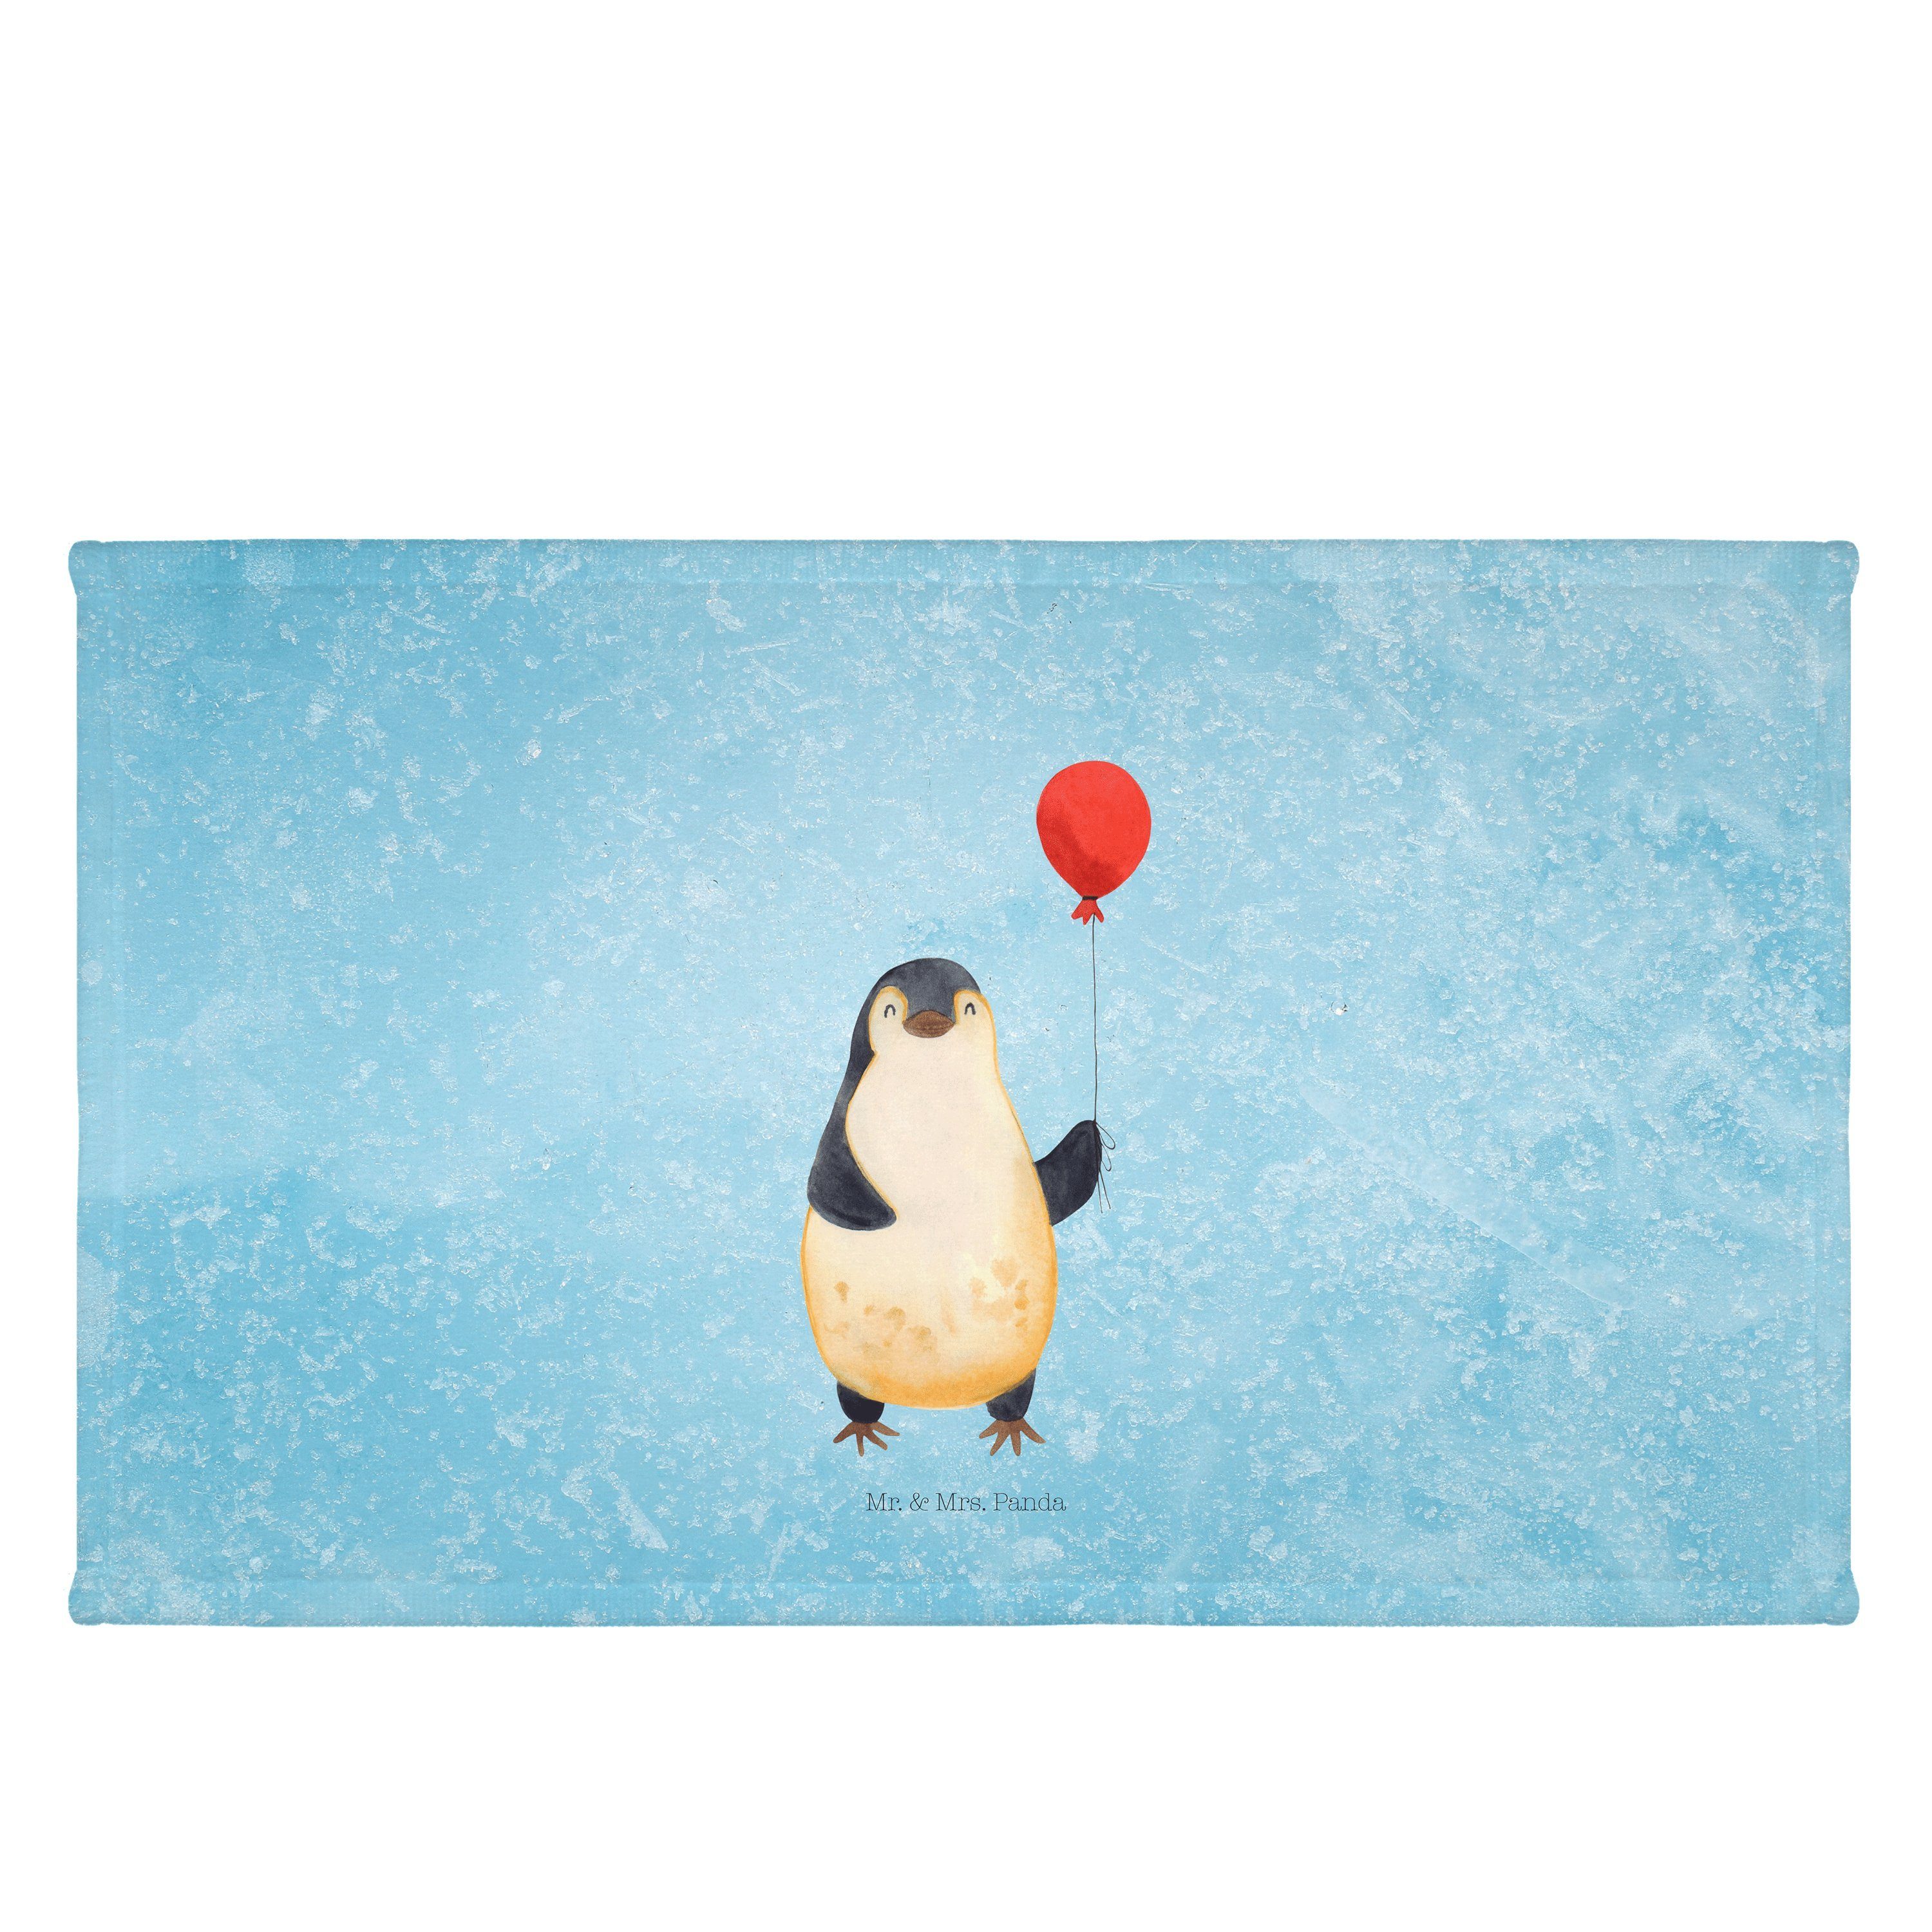 Mr. & Mrs. Panda Handtuch Pinguin Luftballon - Eisblau - Geschenk, Kirmes, Kinder Handtuch, Rei, (1-St)